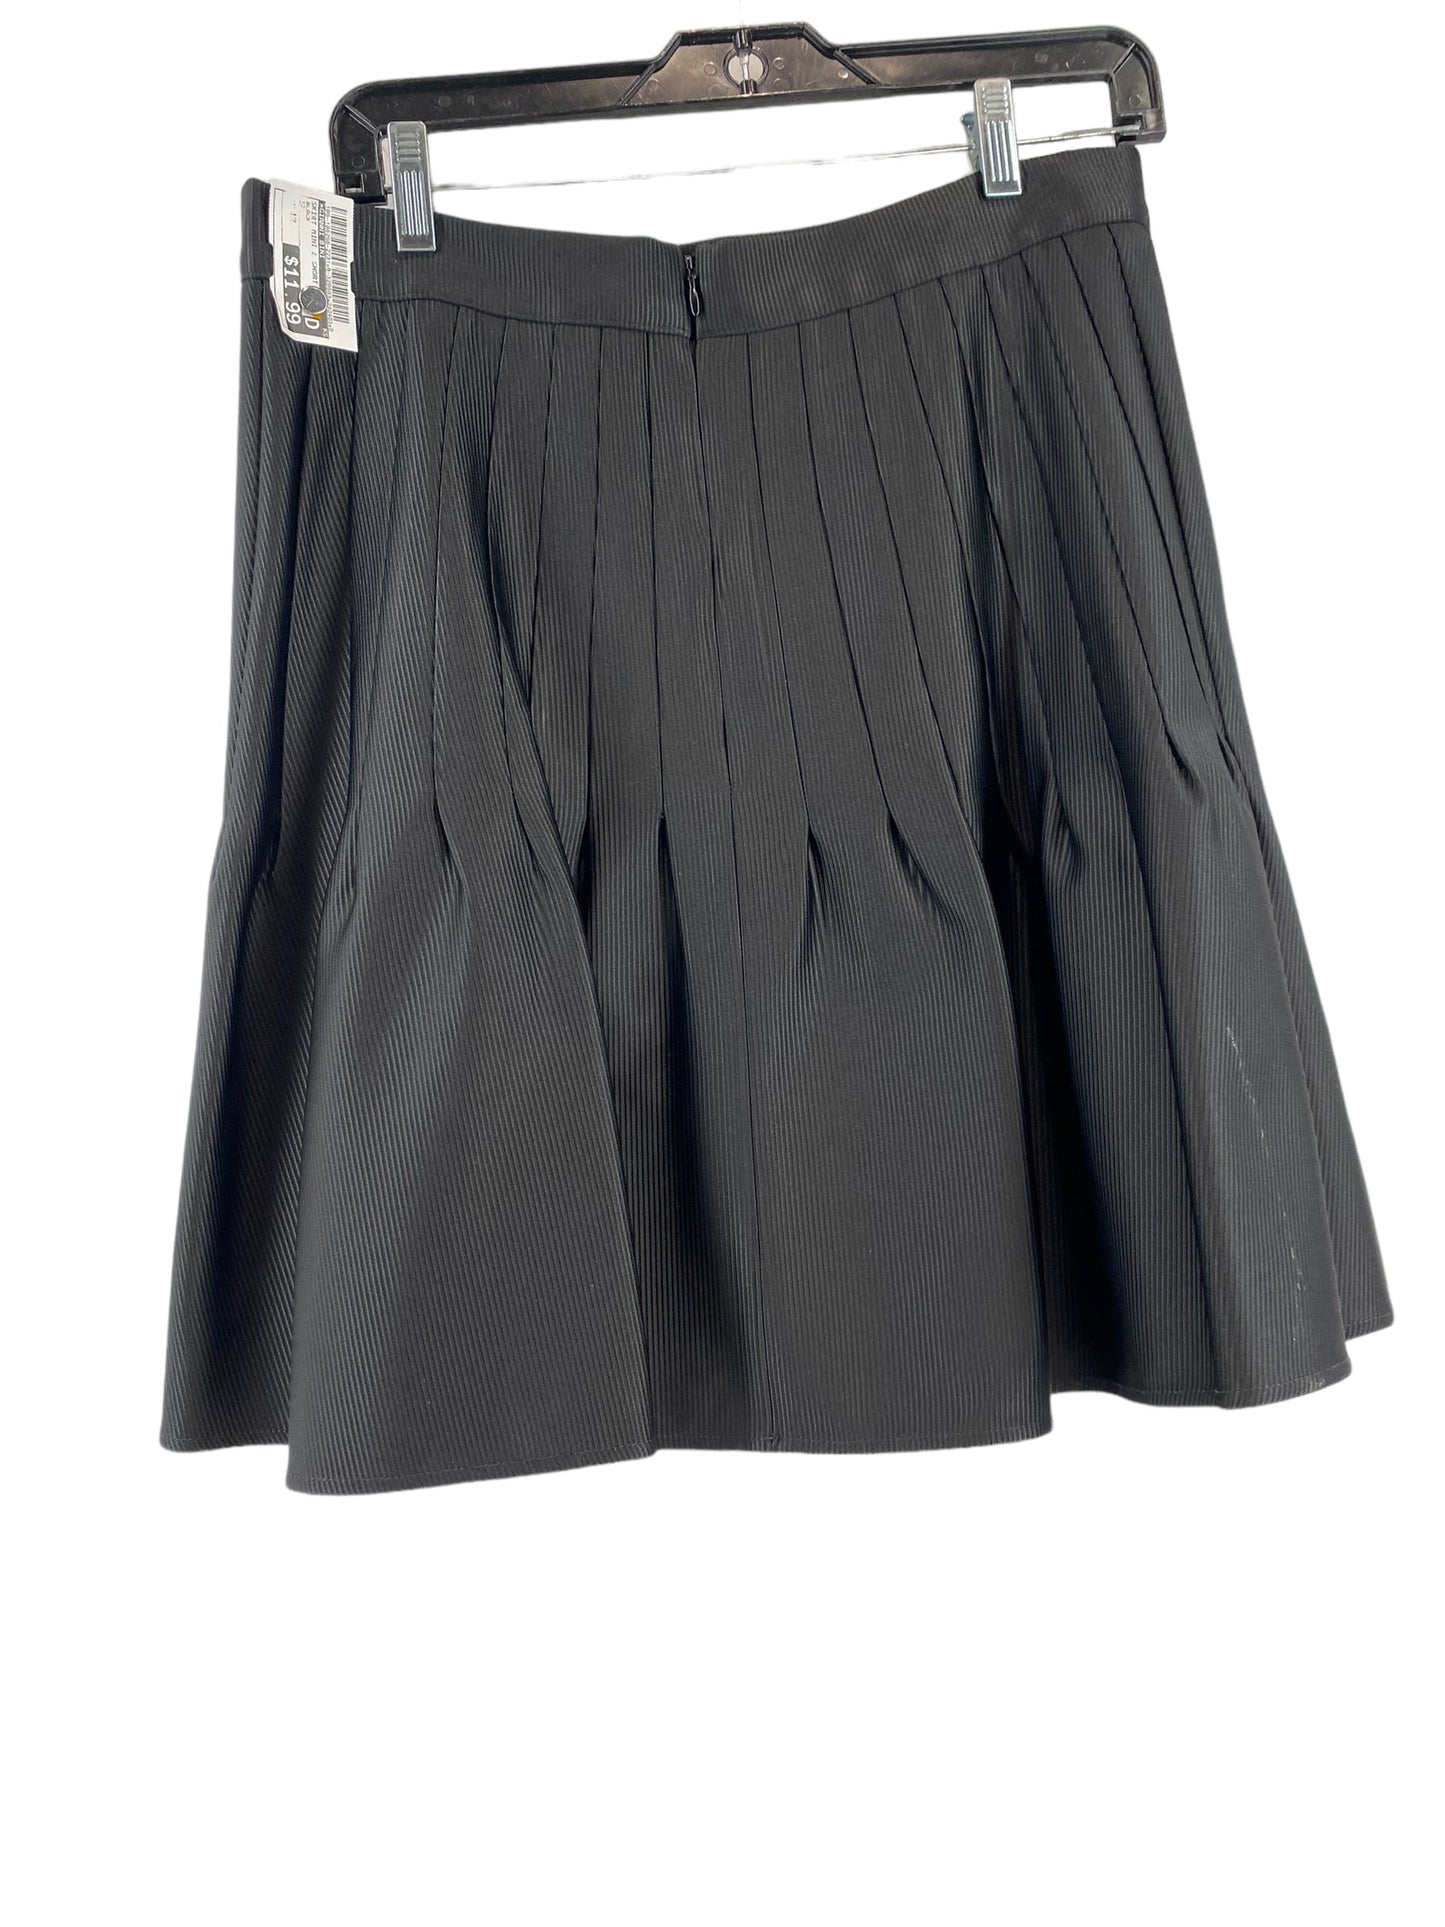 Skirt Mini & Short By Gianni Bini  Size: 12